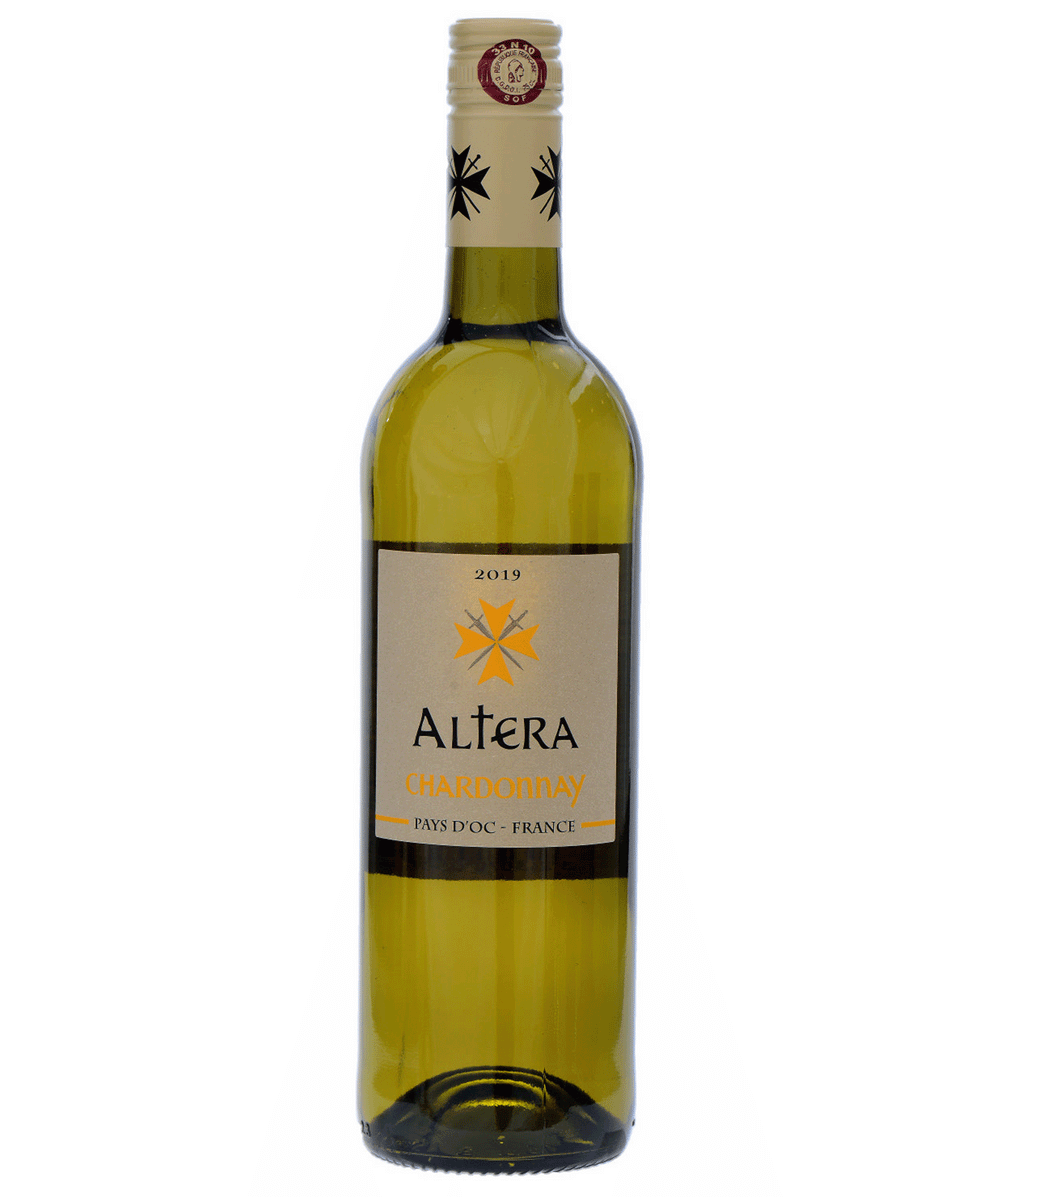 Altera Chardonnay 2019